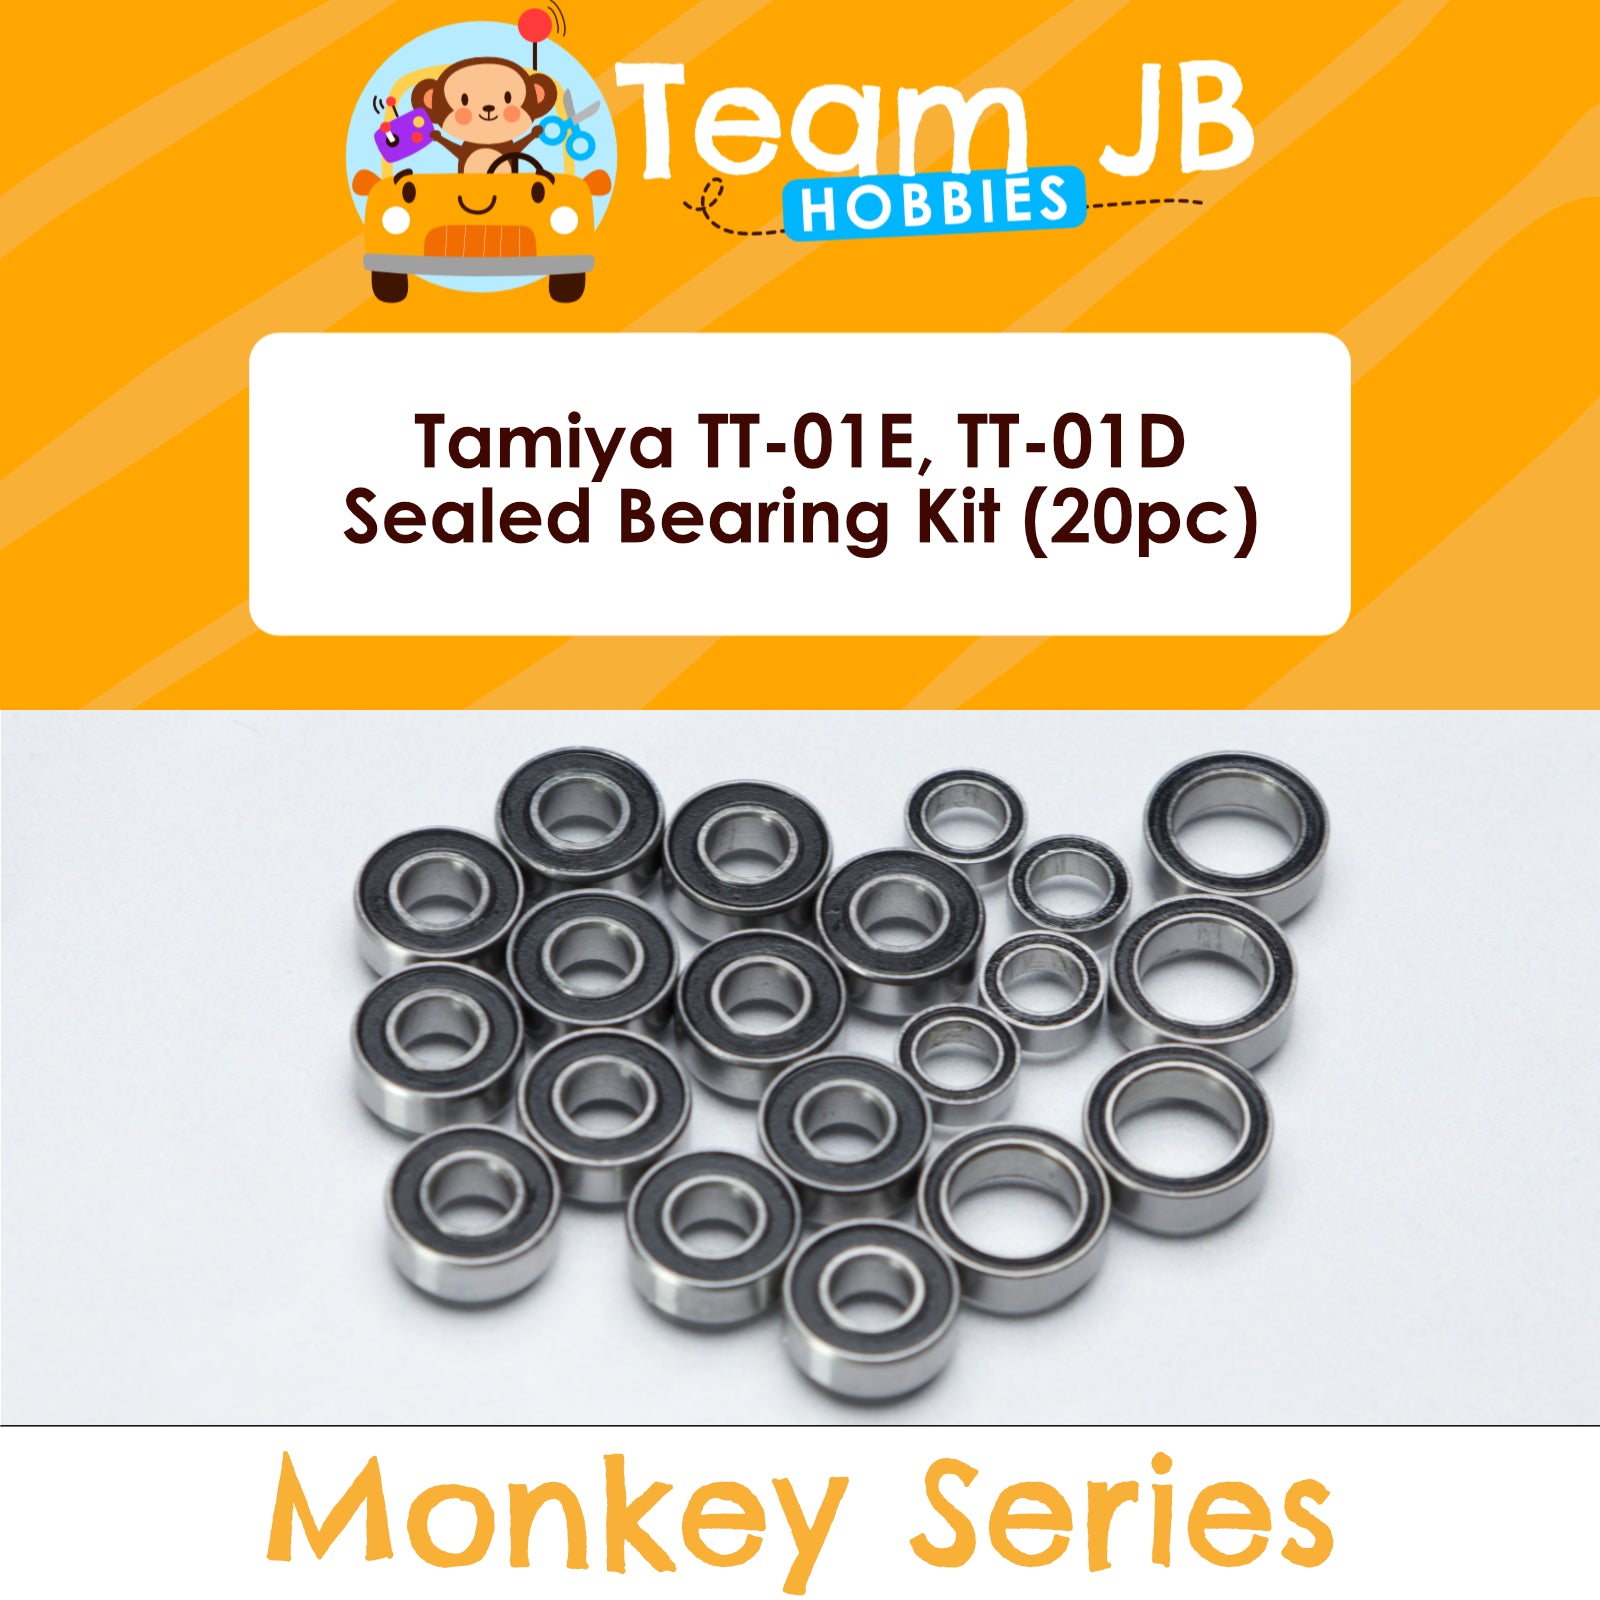 Tamiya TT-01E, TT-01D - Sealed Bearing Kit